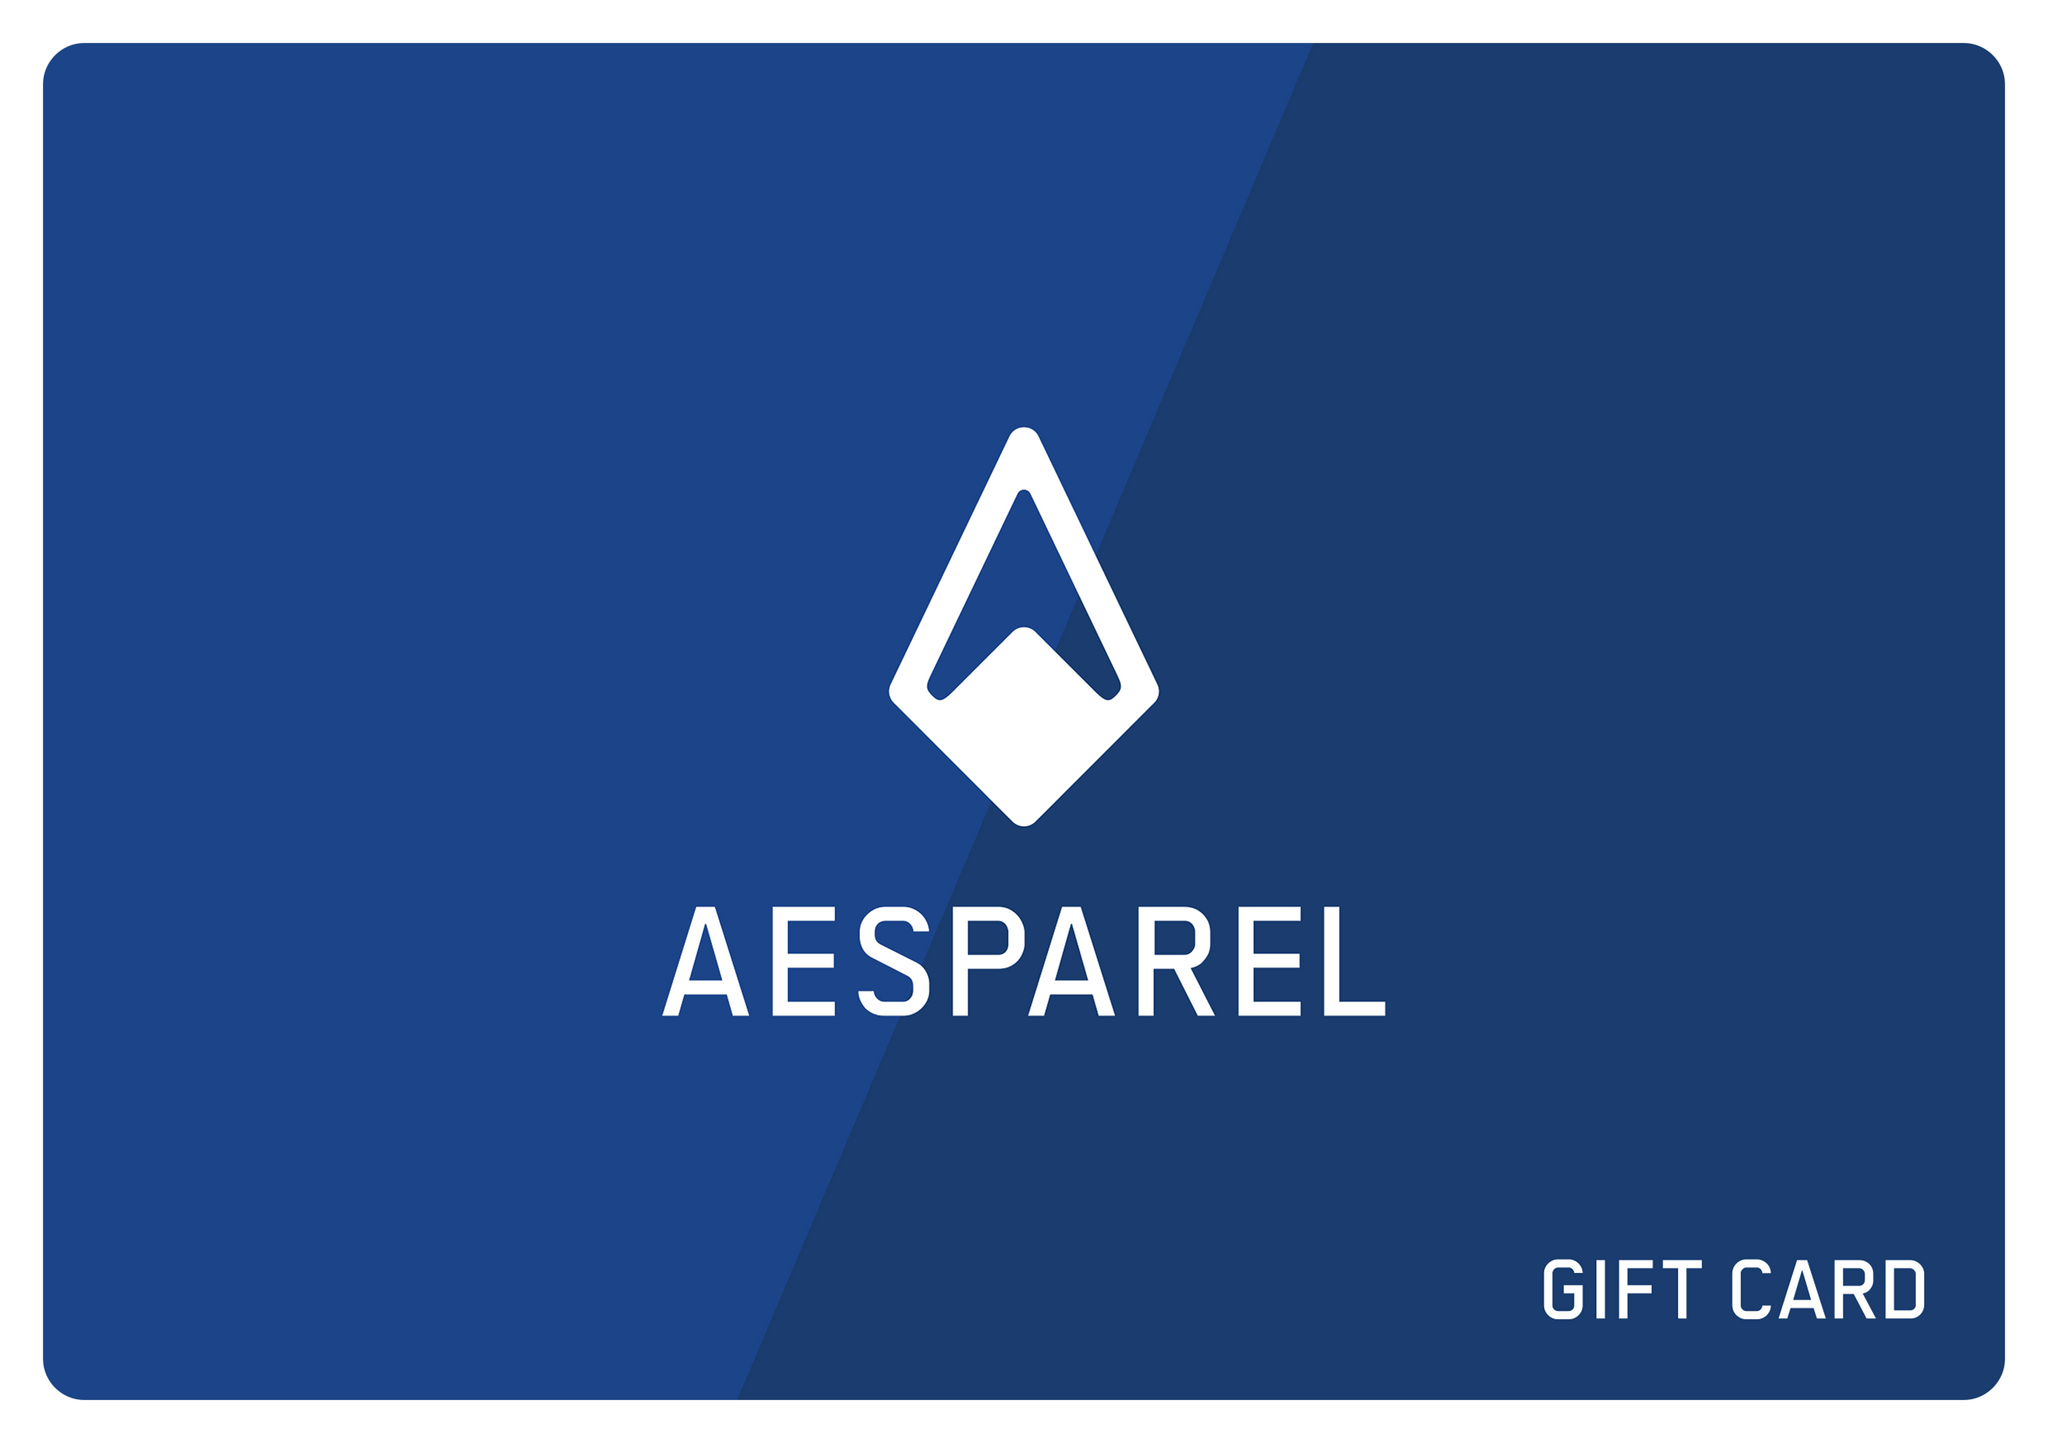 AESPAREL Gift Card